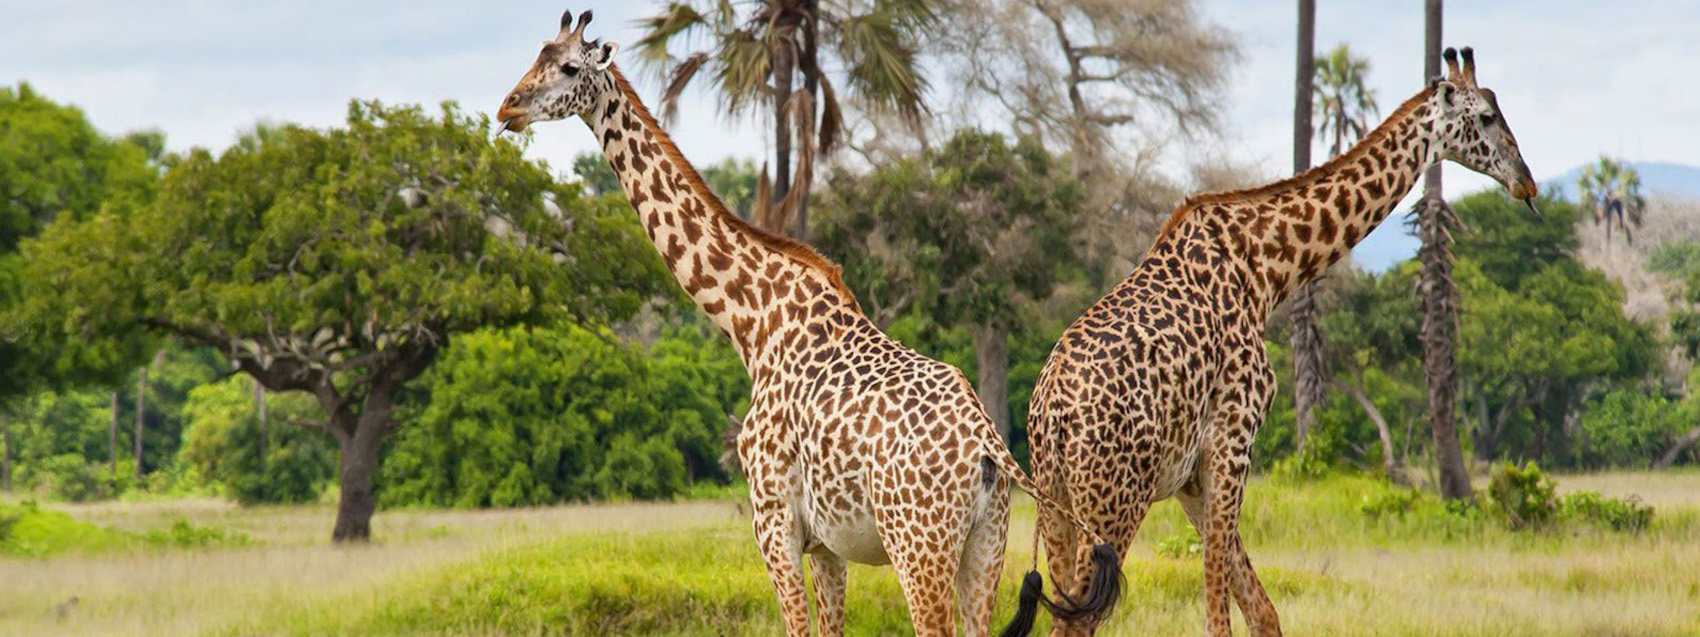 3 Days Safari from Dar es Salaam to Saadani National Park